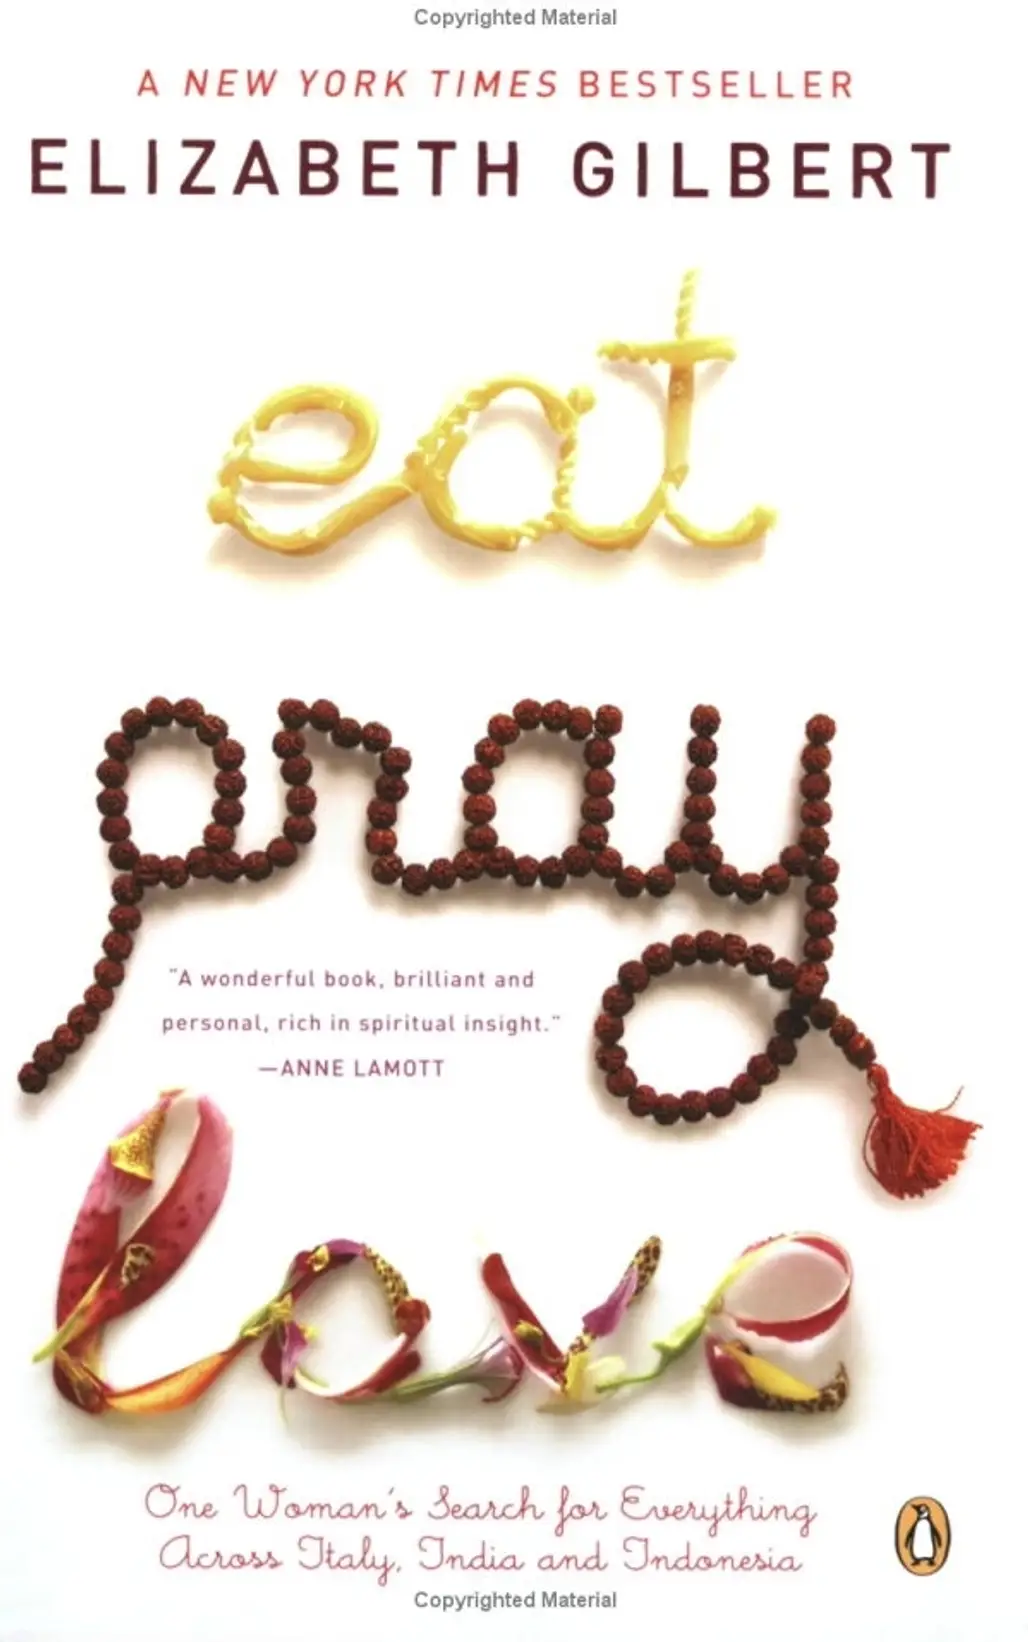 Eat, Pray Love by Elizabeth Gilbert